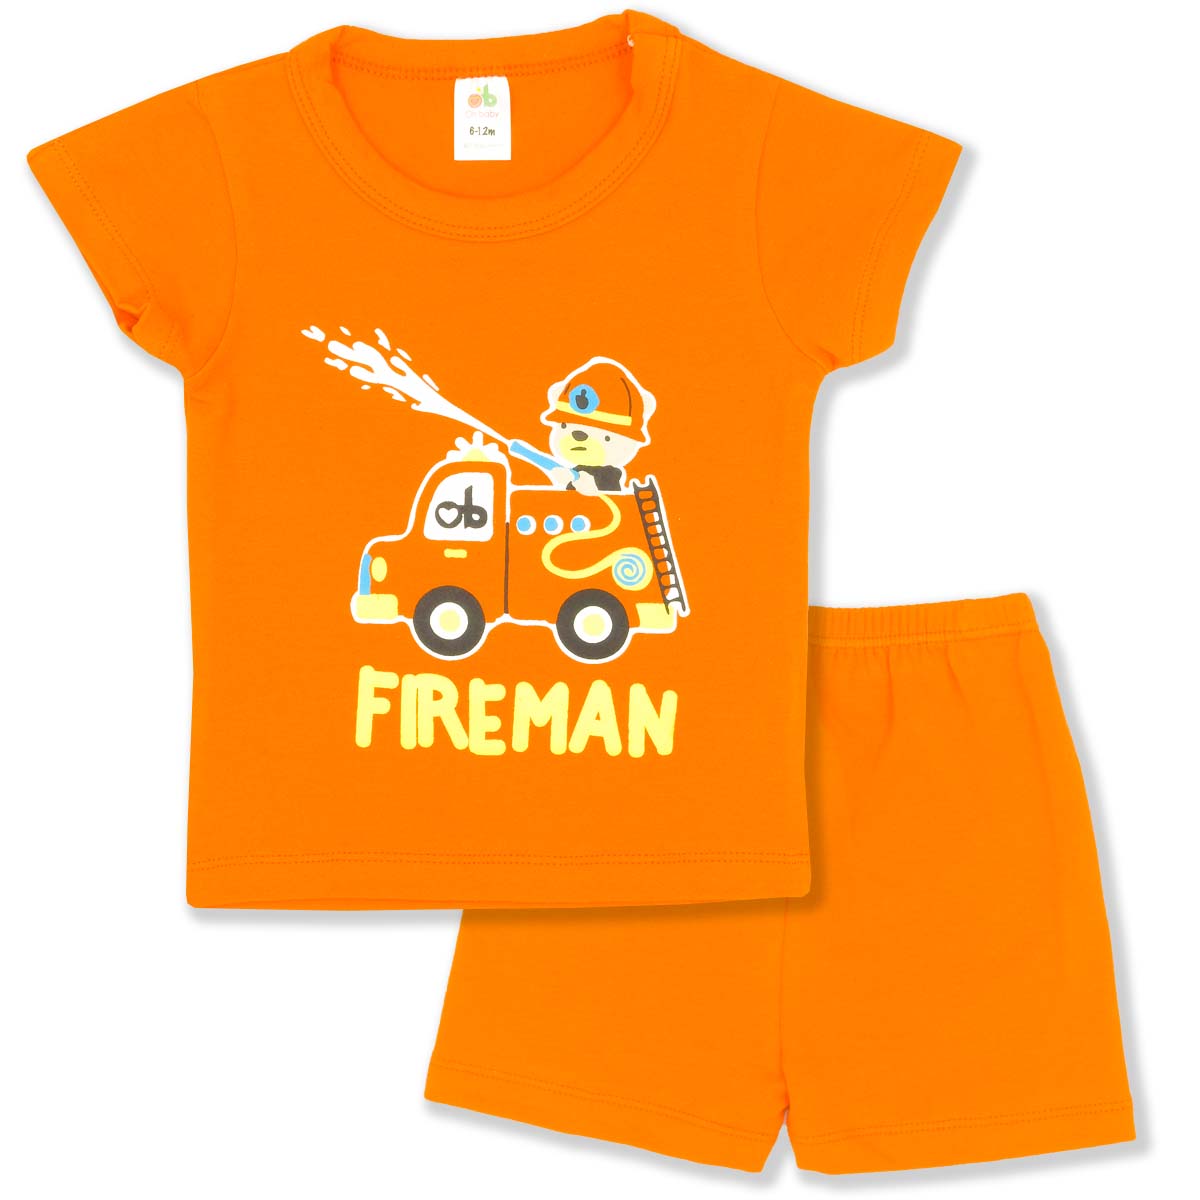 T-shirt set  “Fireman'” – Orange